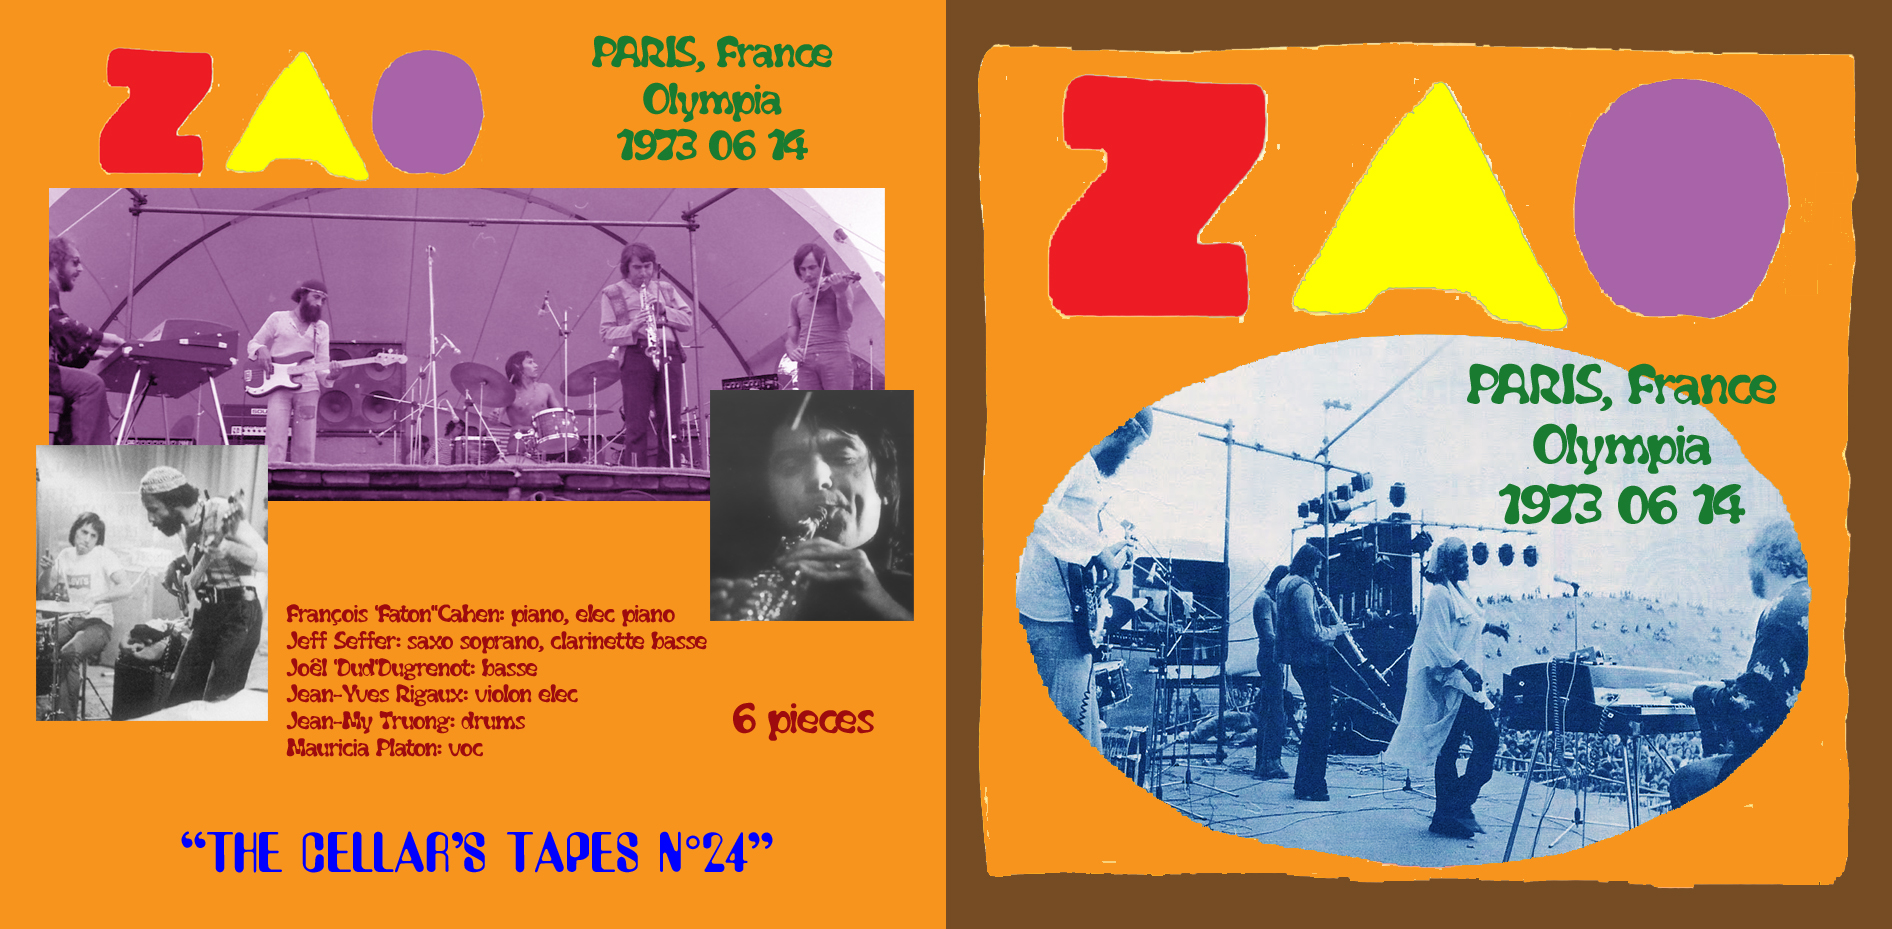 ZAO1973-06-14OlympiaParisFrance (3).jpg